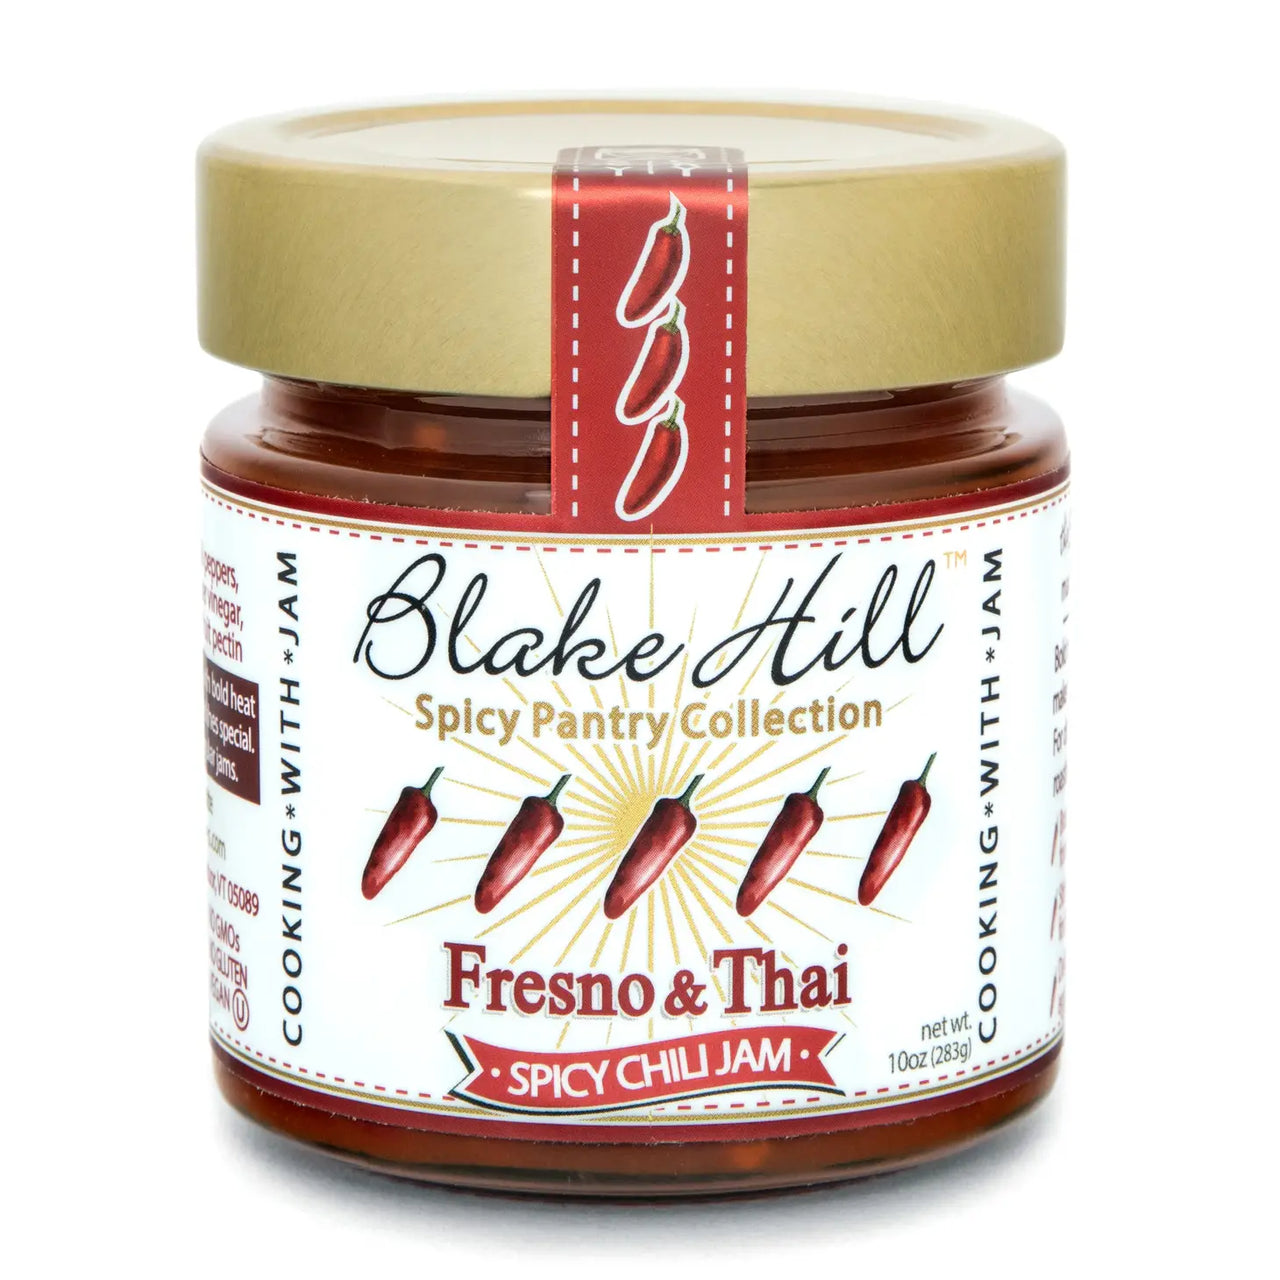 Fresno & Thai Spicy Chili Jam